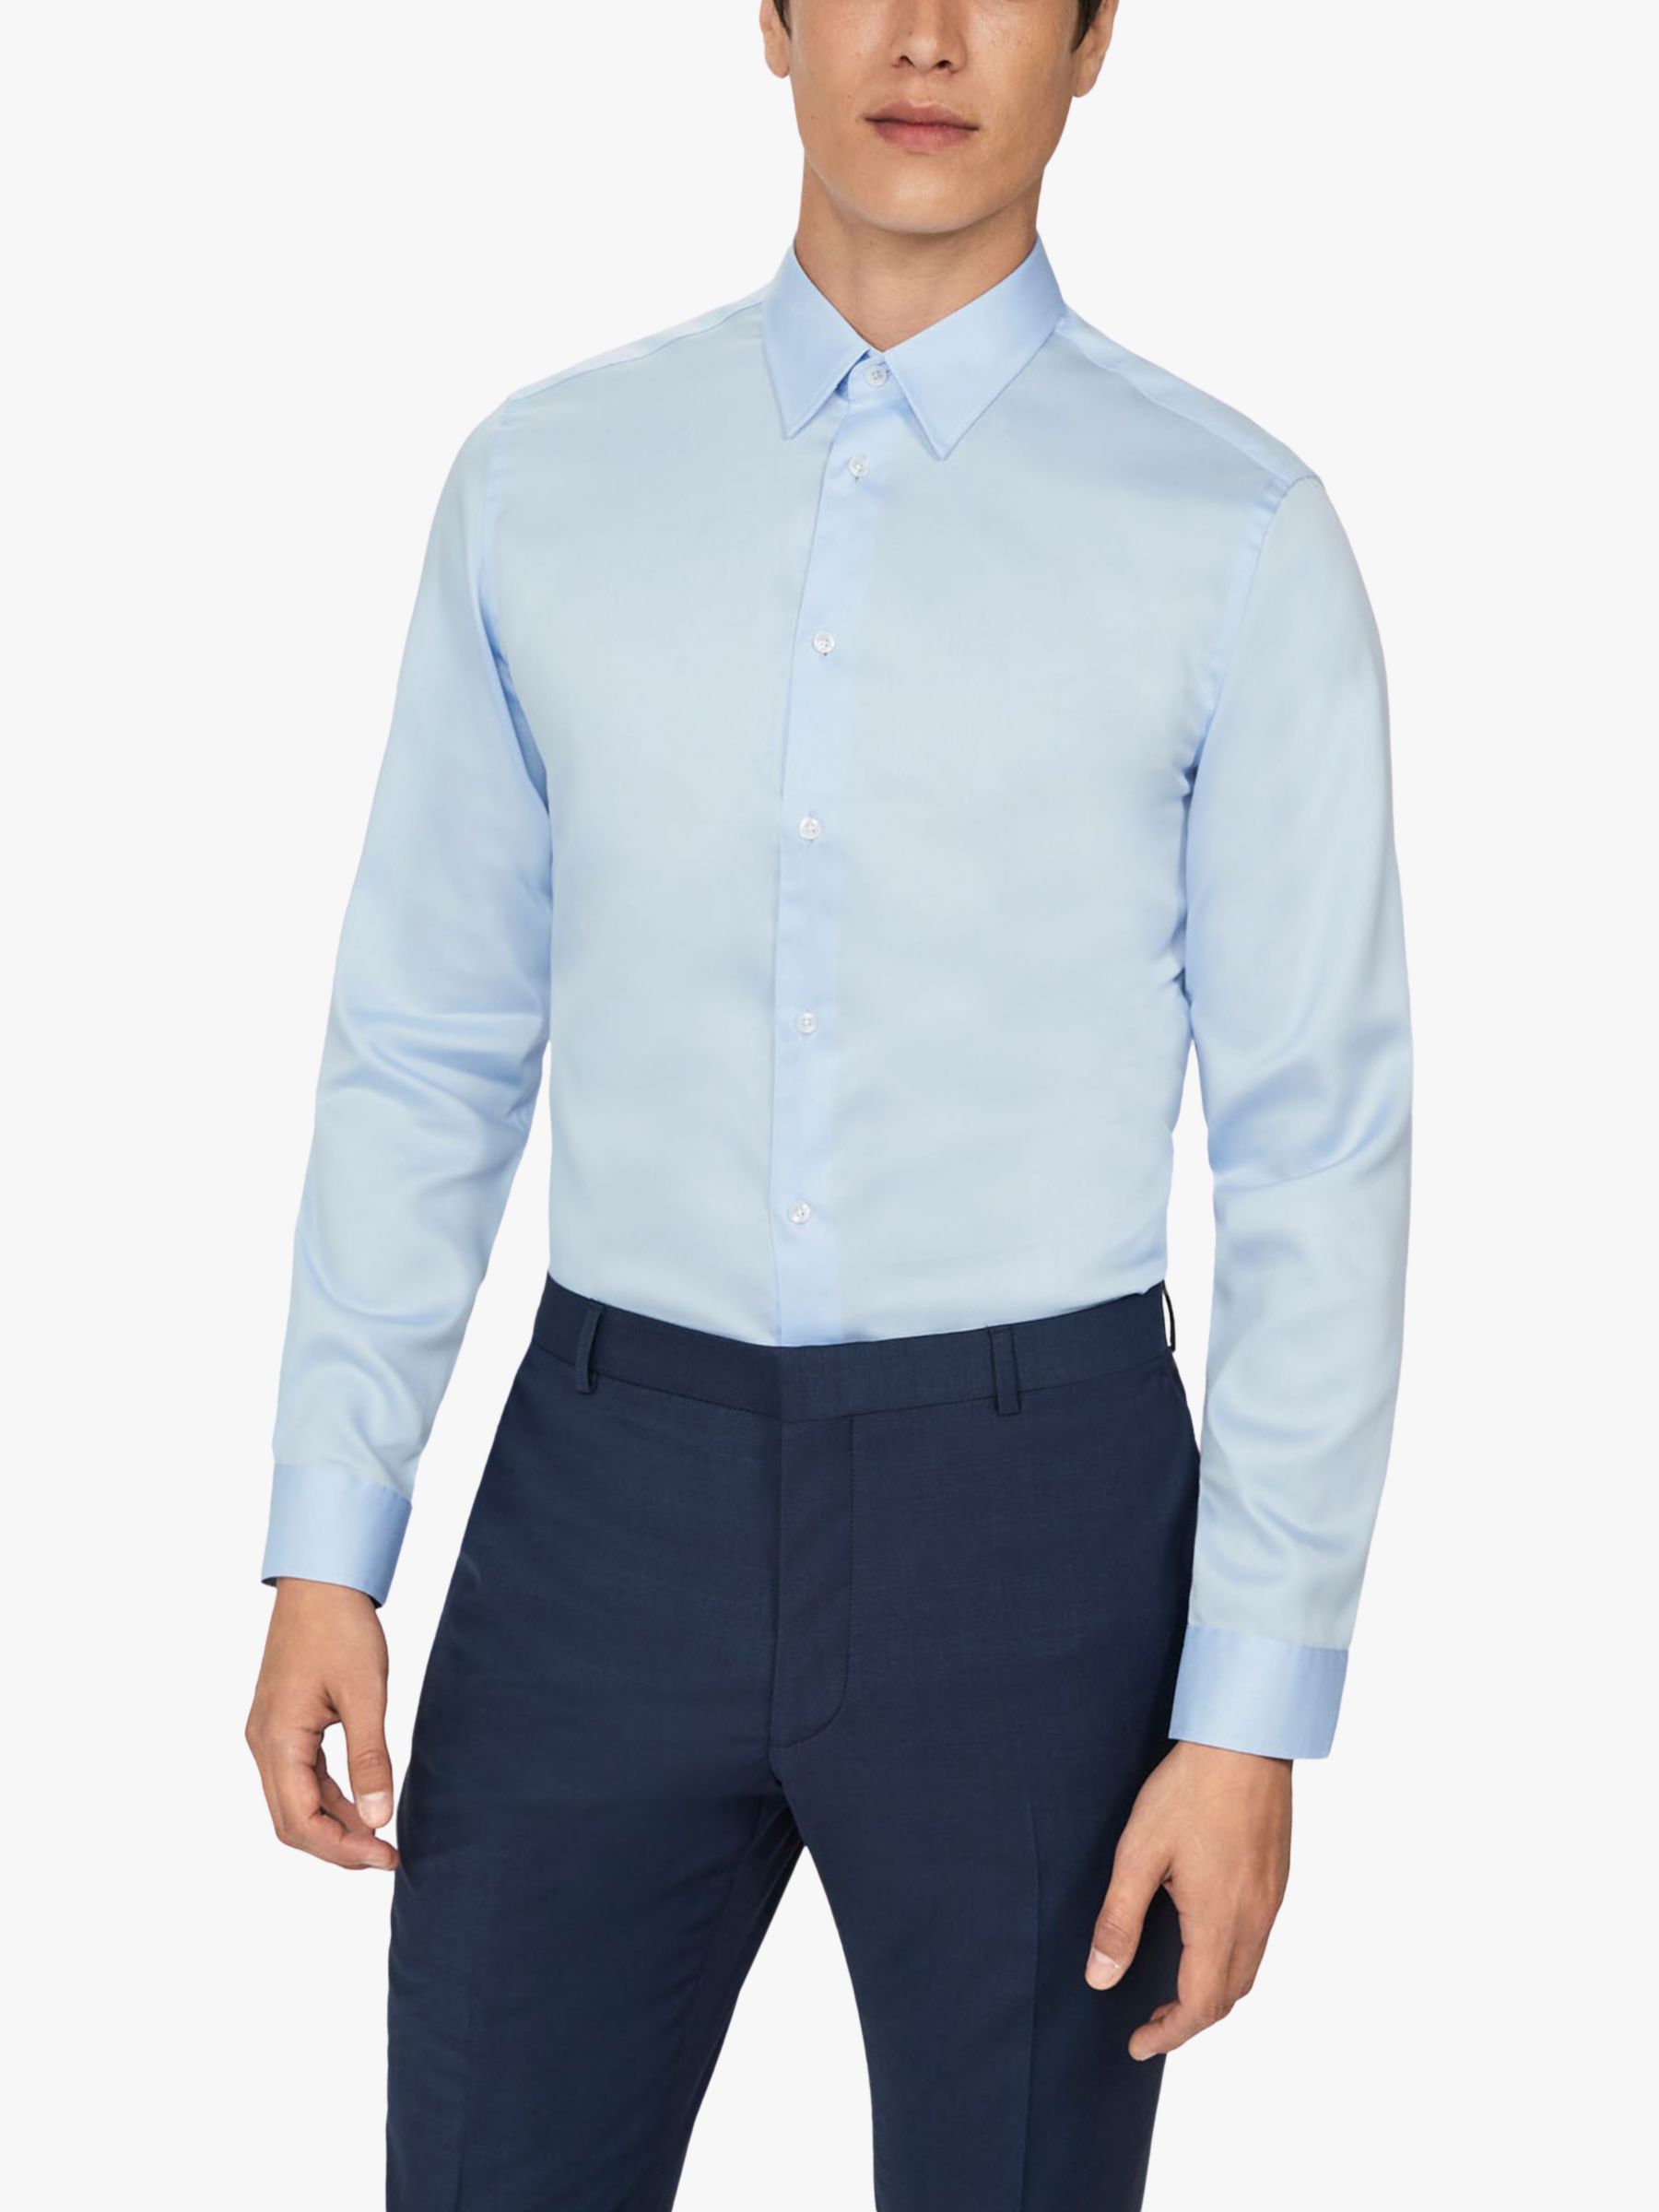 Ted Baker Sateen Slim Fit Shirt, Light Blue at John Lewis & Partners